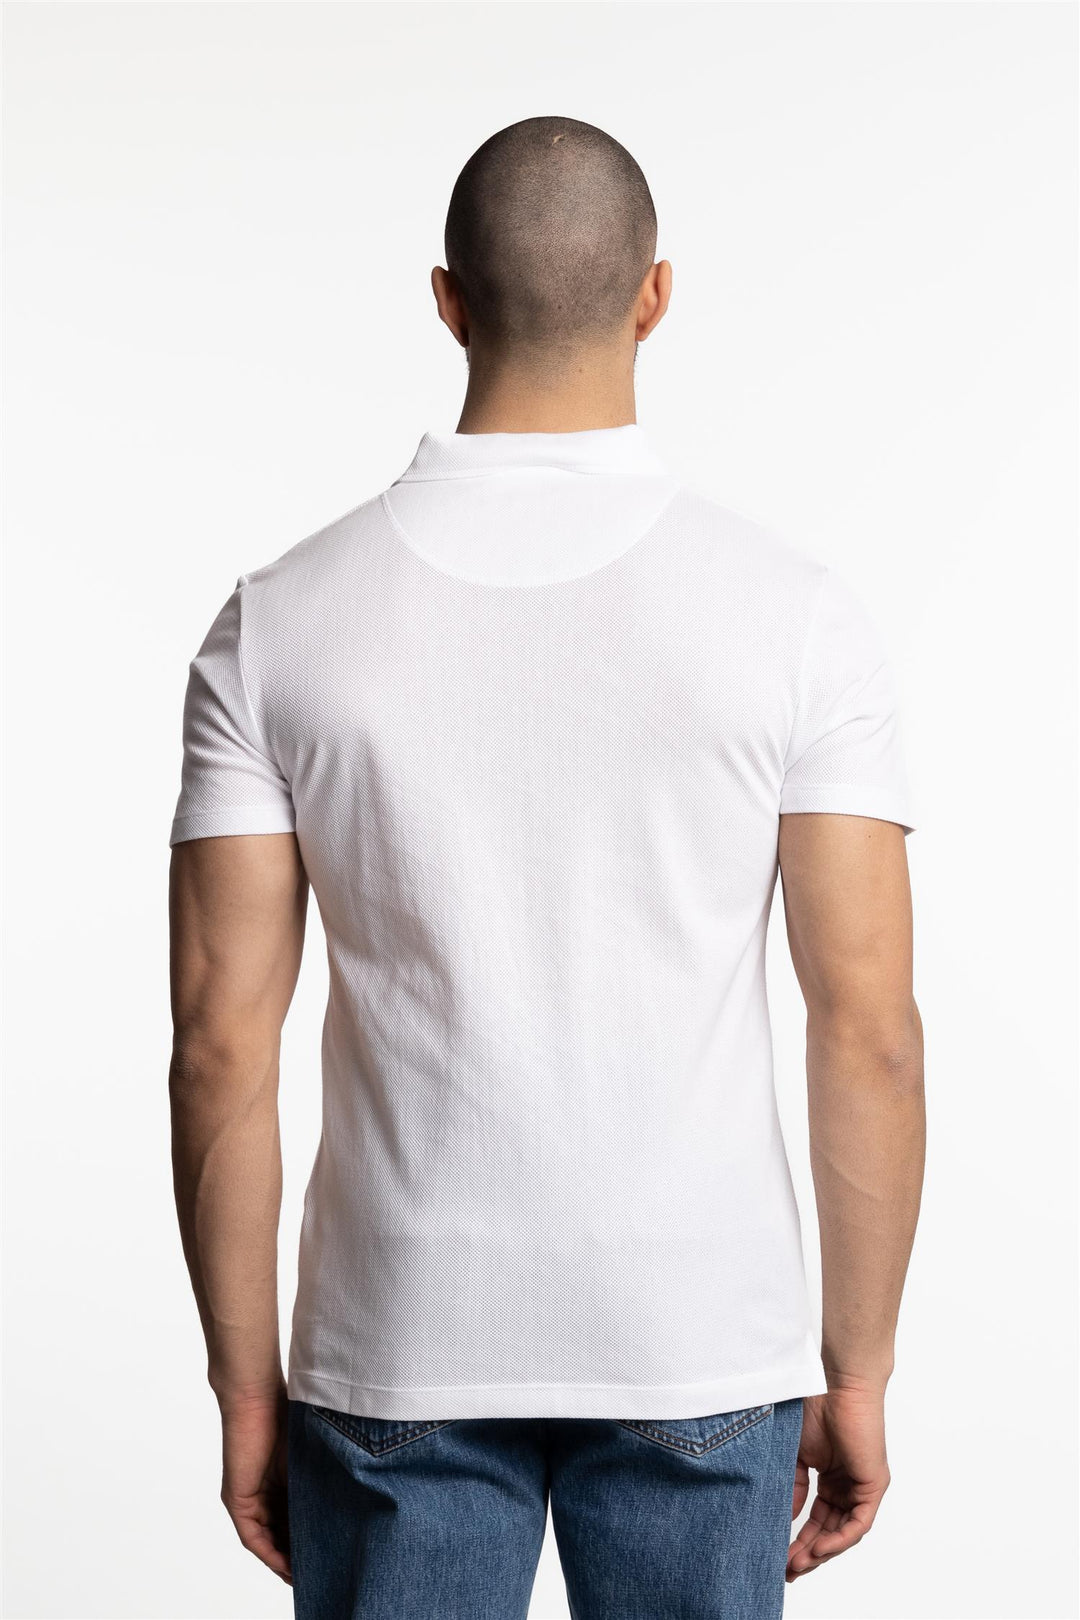 Riviera Polo Shirt White